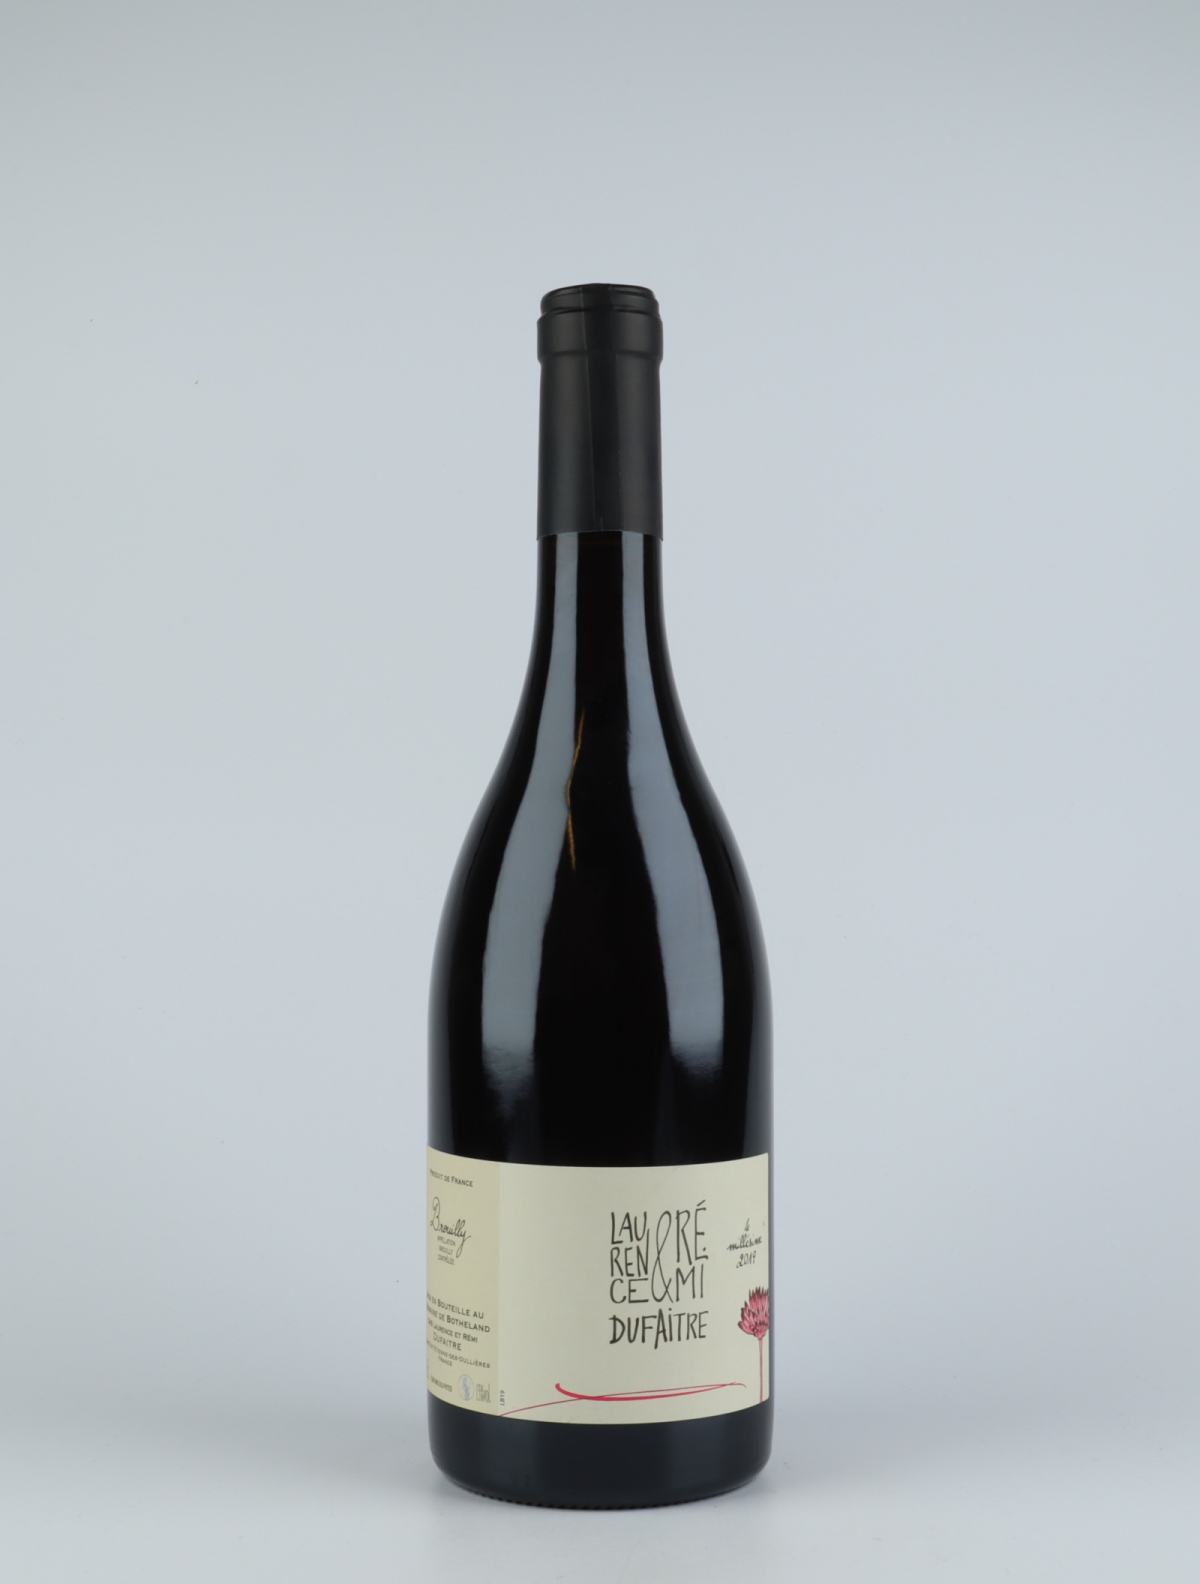 En flaske 2019 Brouilly Rødvin fra Laurence & Rémi Dufaitre, Beaujolais i Frankrig